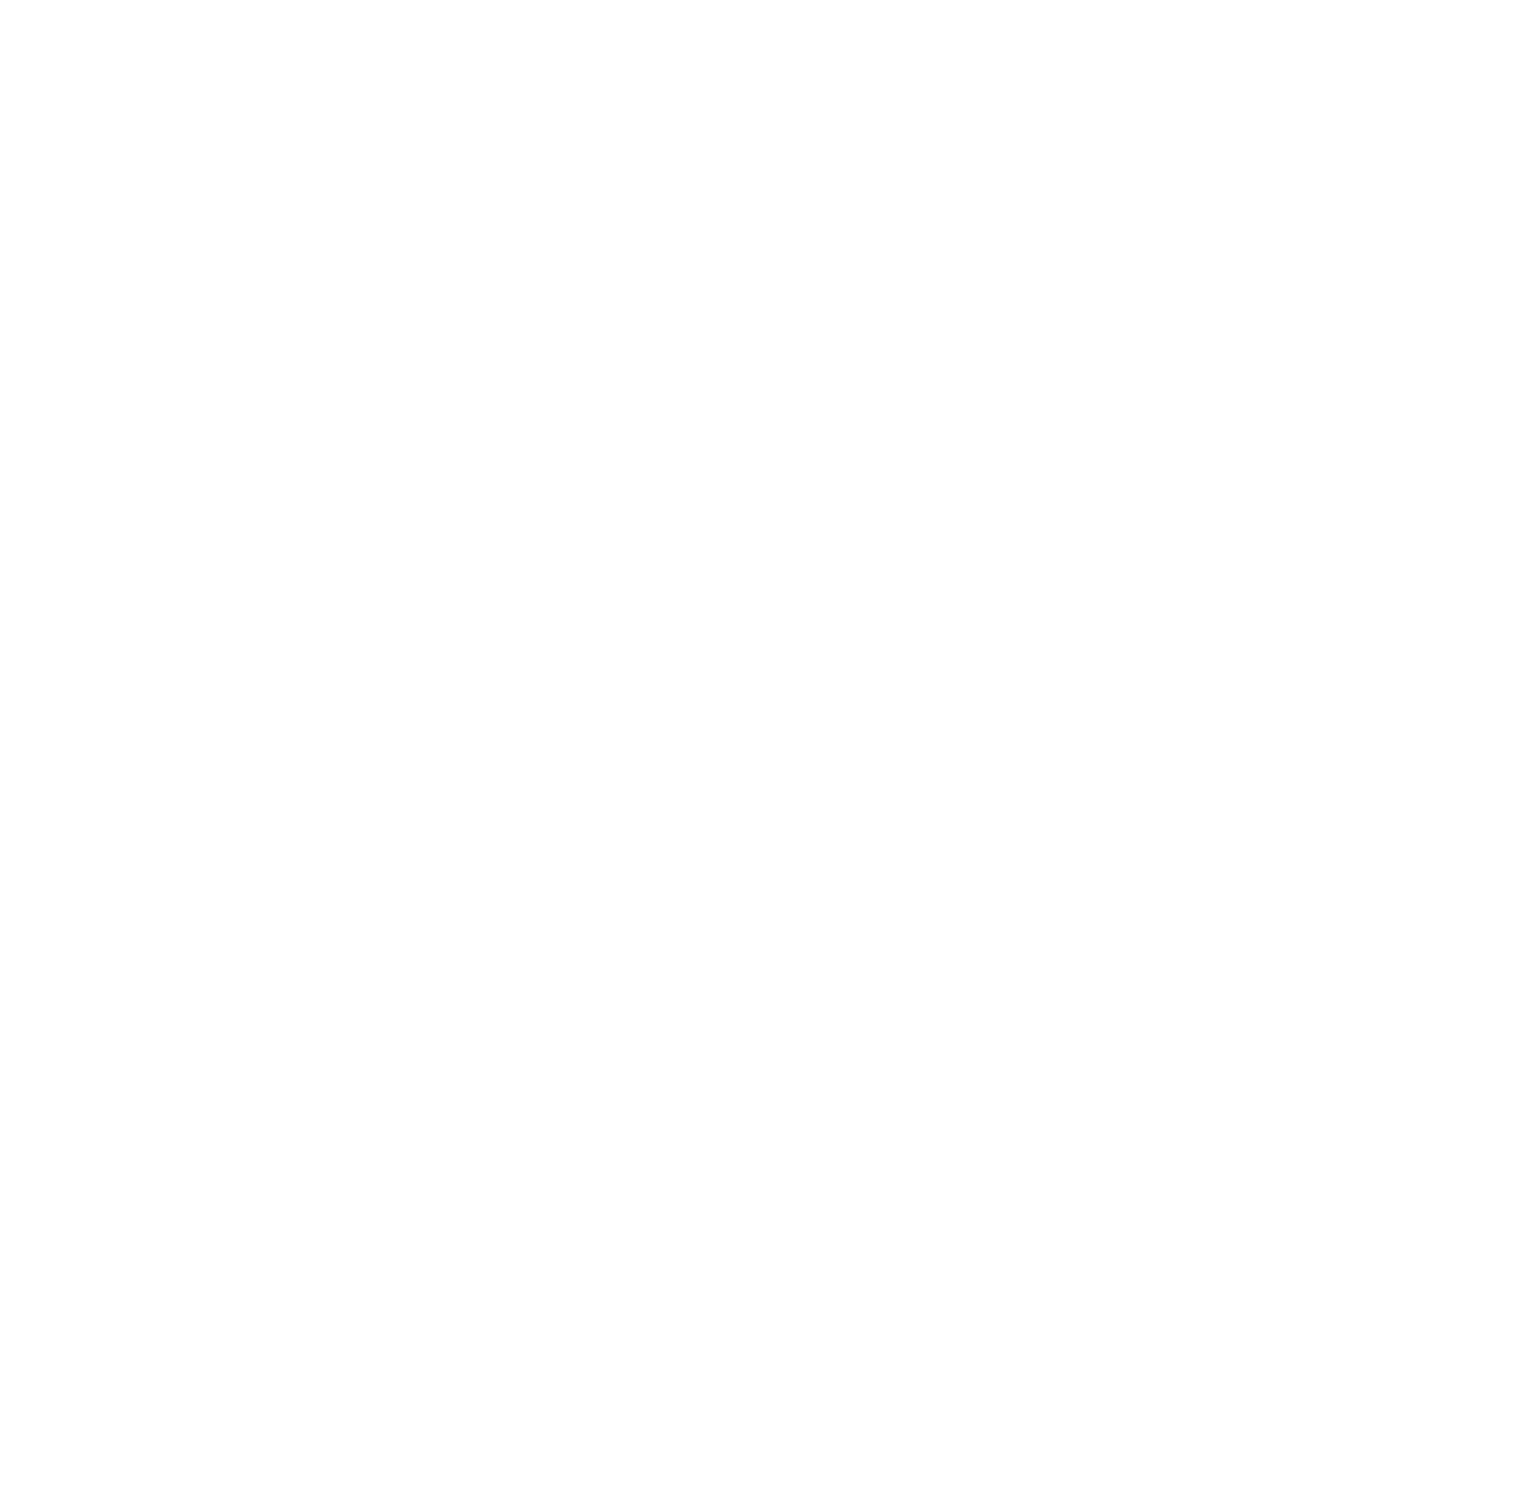 Verisk Analytics logo pour fonds sombres (PNG transparent)